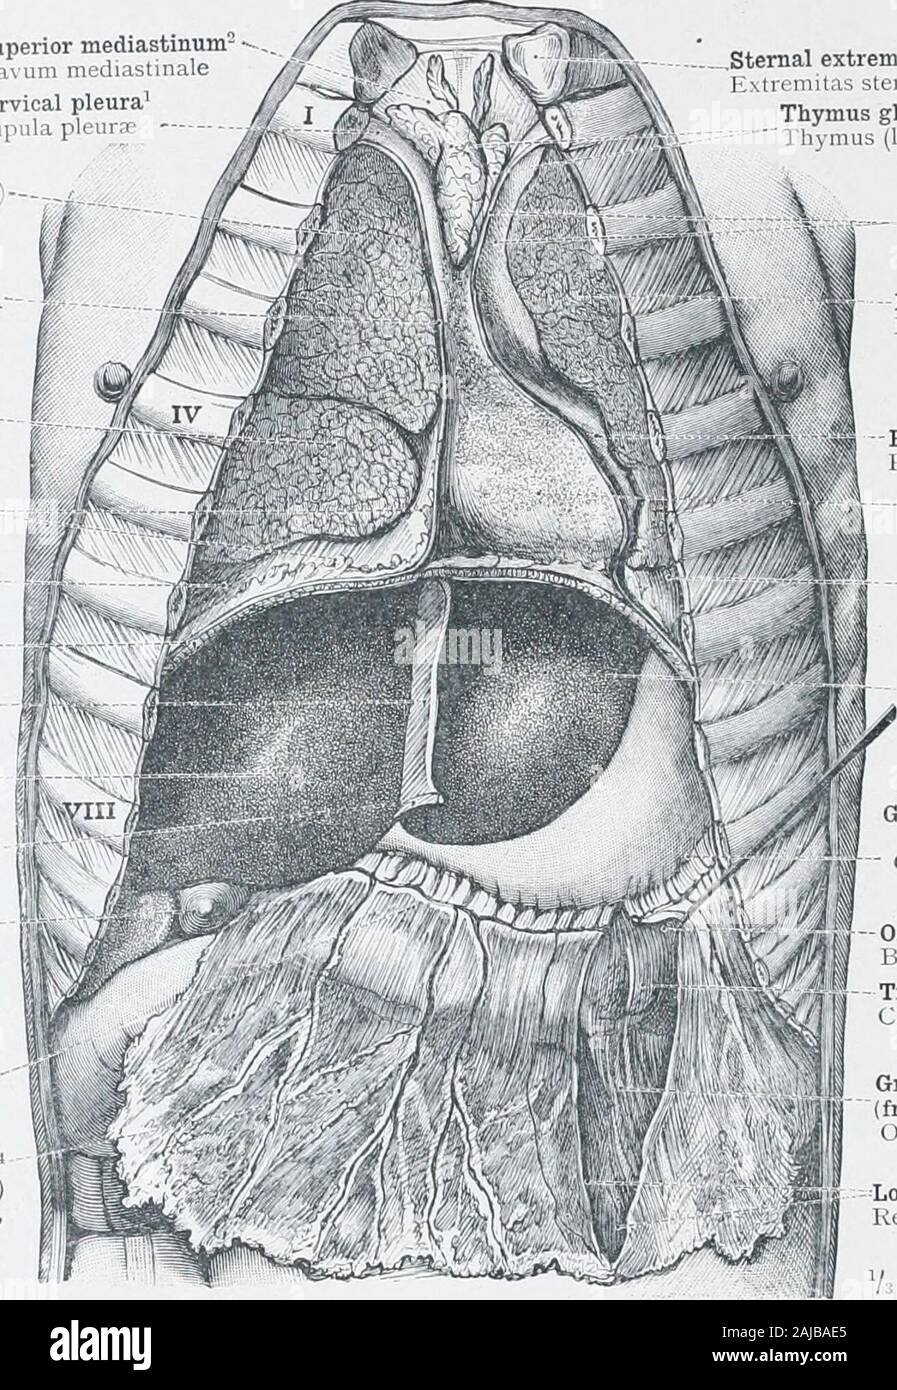 An atlas of human anatomy for students and physicians . he Transverse Colon; ColonSigmoideum, the Sigmoid Flexure of the Colon, and its Transition into the Rectum(Intestinum Rectum). Topographical Anatomy of the Abdominal Viscera. 60—2 476 TOPOGRAPHICAL ANATOMY OF THE THORACIC AND ABDOMINAL VISCERA Superior mediastinum Cavum mediistiCervical pleuraCupula pleurjp Eight lung (upper lobe Pulmo dexter (lobubsuperior) Right layer of the mediastinun, (cut edge) Lamina mediastinalis dextra Right lung (middle lobe Iulmo dexter (lobusmedius)PlicEe villosffi, villous or..fatty folds, of the pleurarlicar Stock Photo